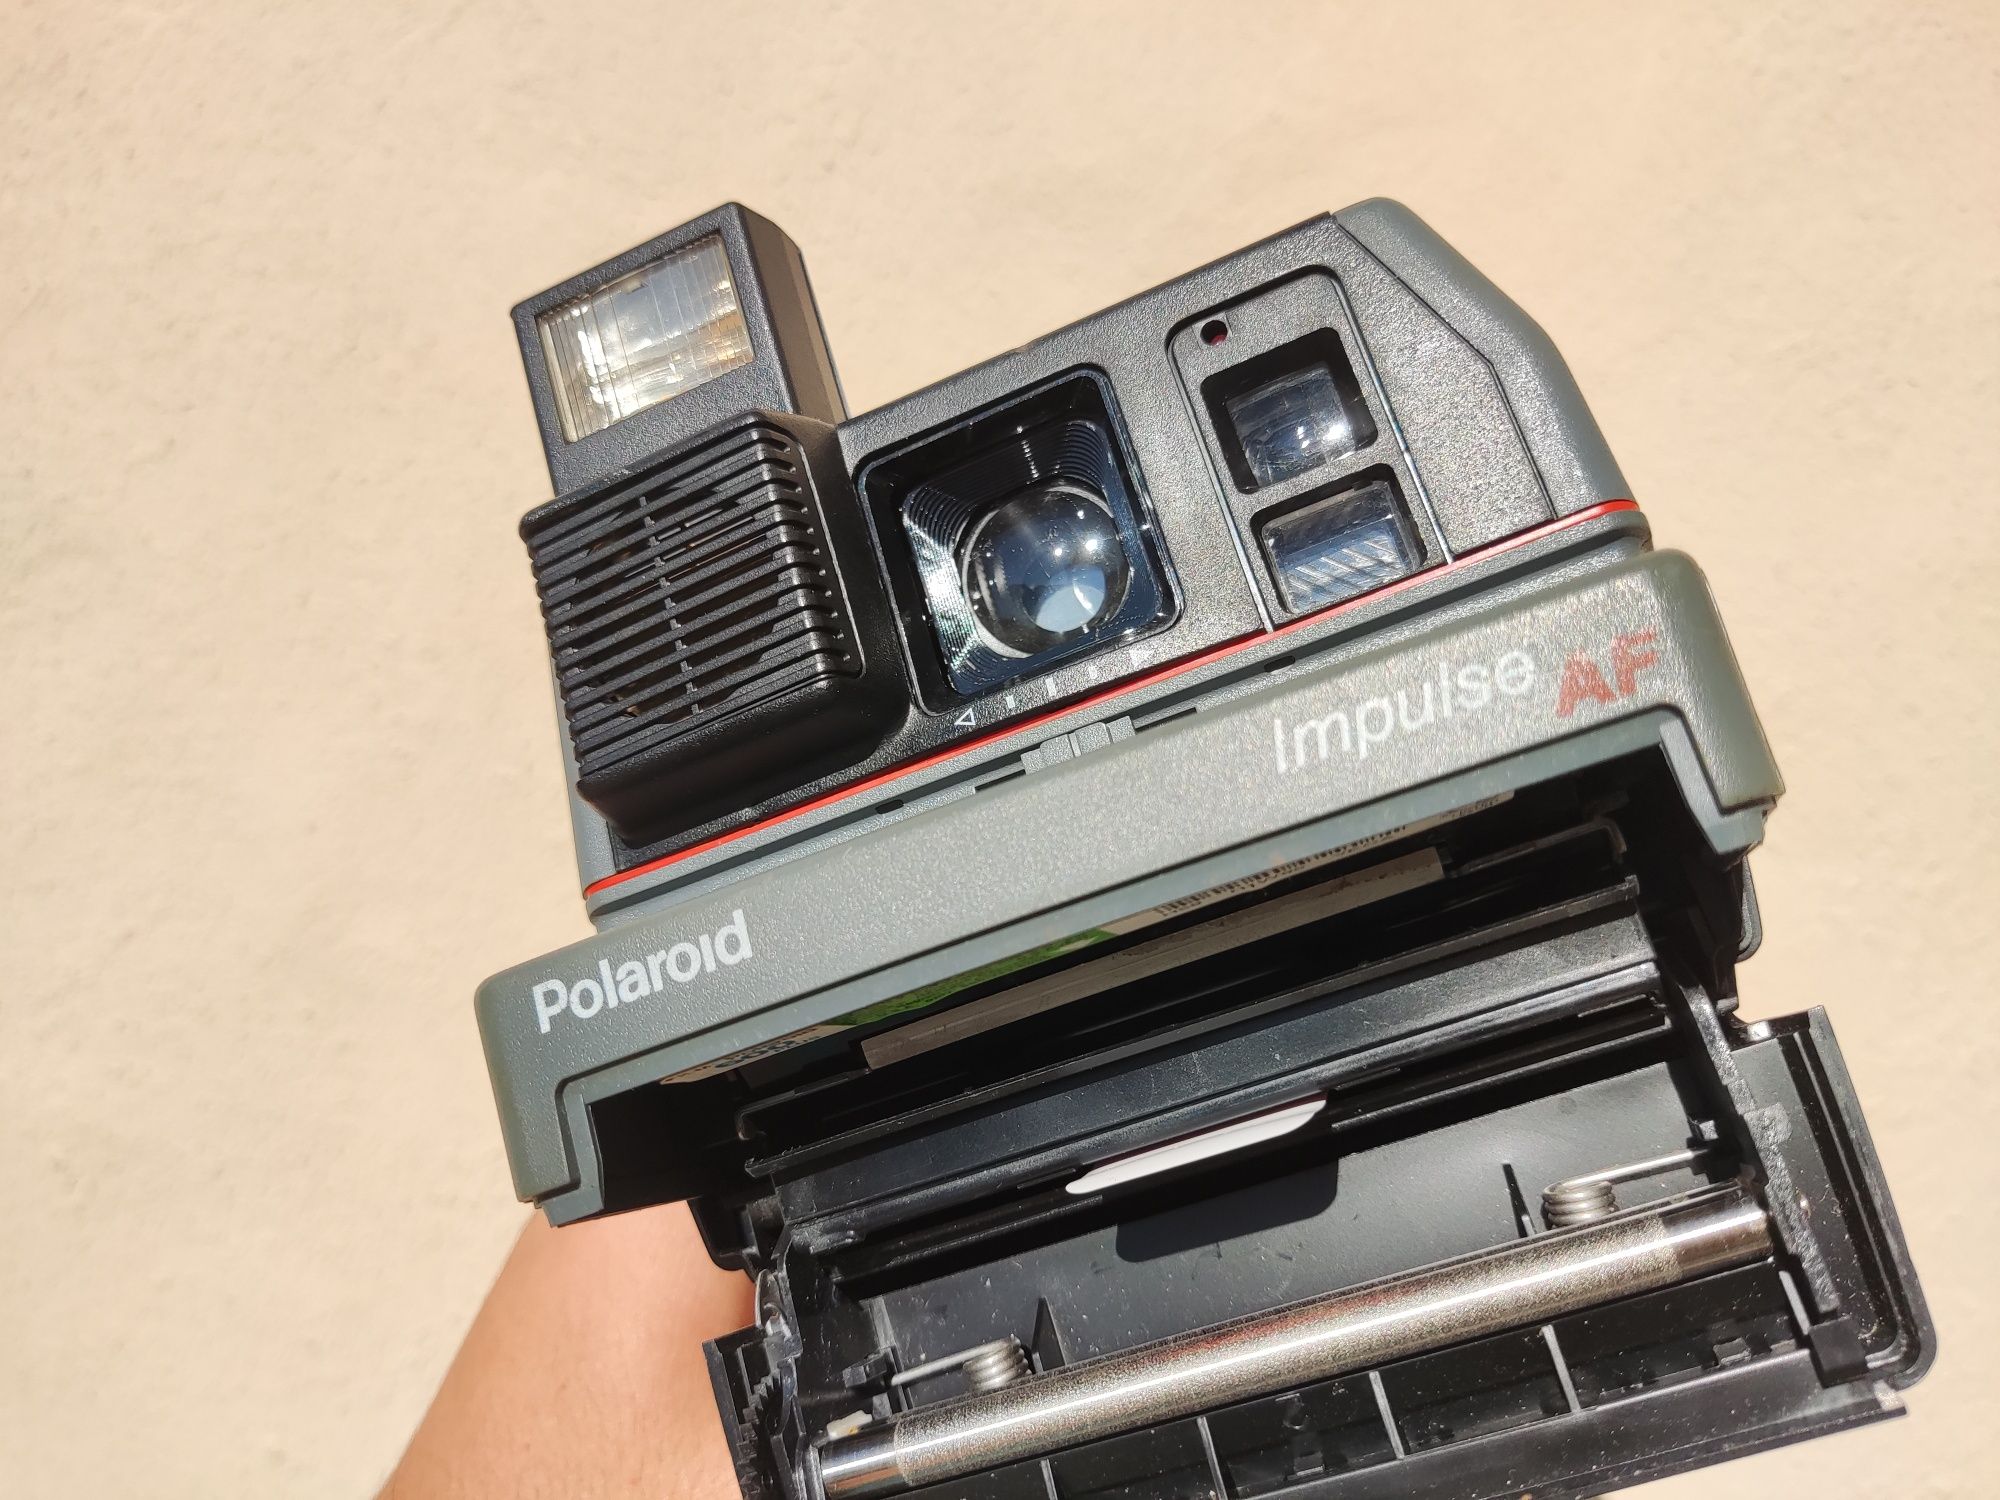 Polaroid Impulse AutoFocus System (1994) - vintage